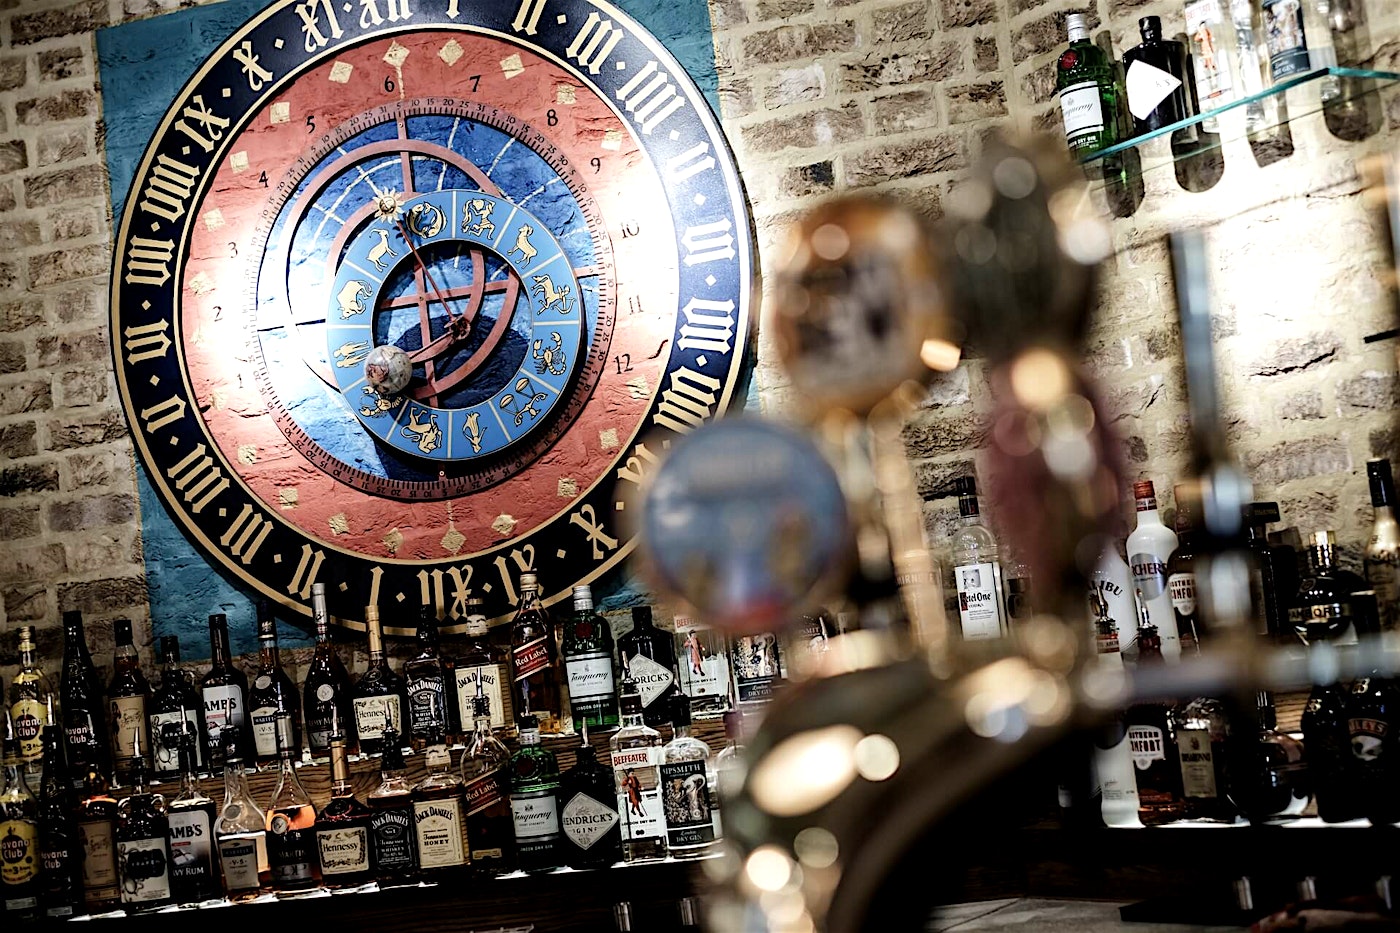 The bar inside The Astronomer, a pub near Liverpool Street station